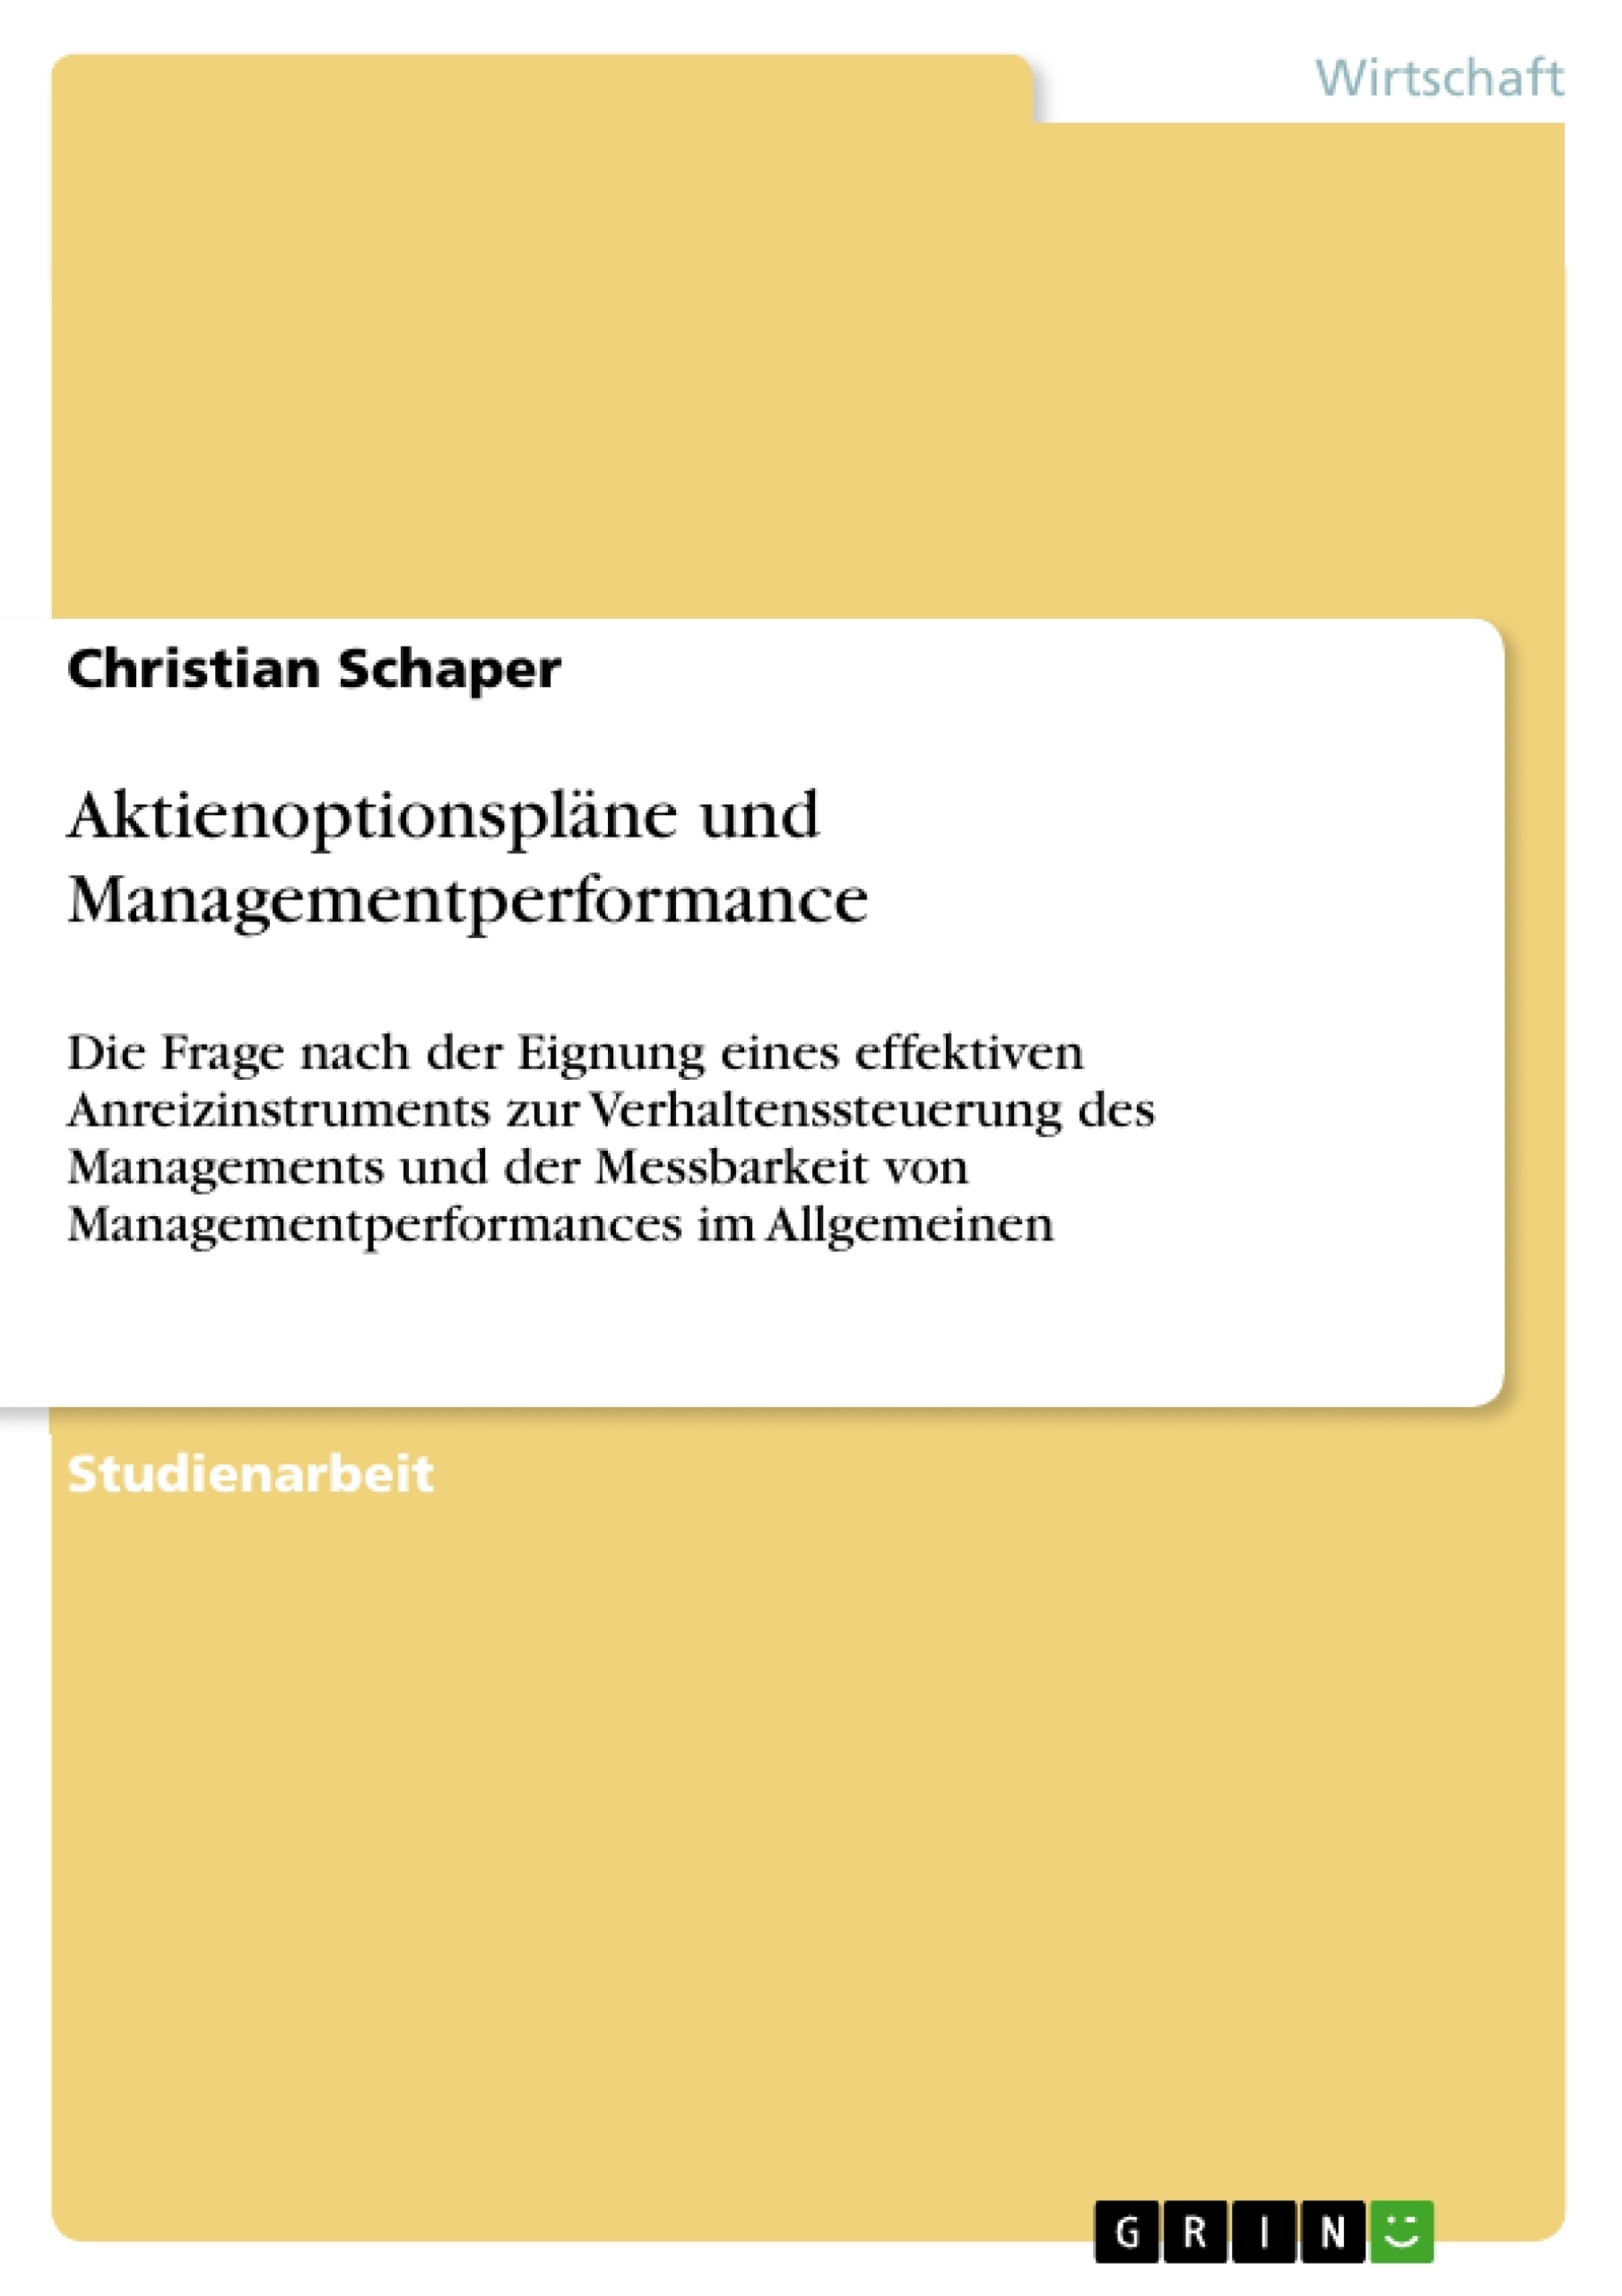 Título: Aktienoptionspläne und Managementperformance